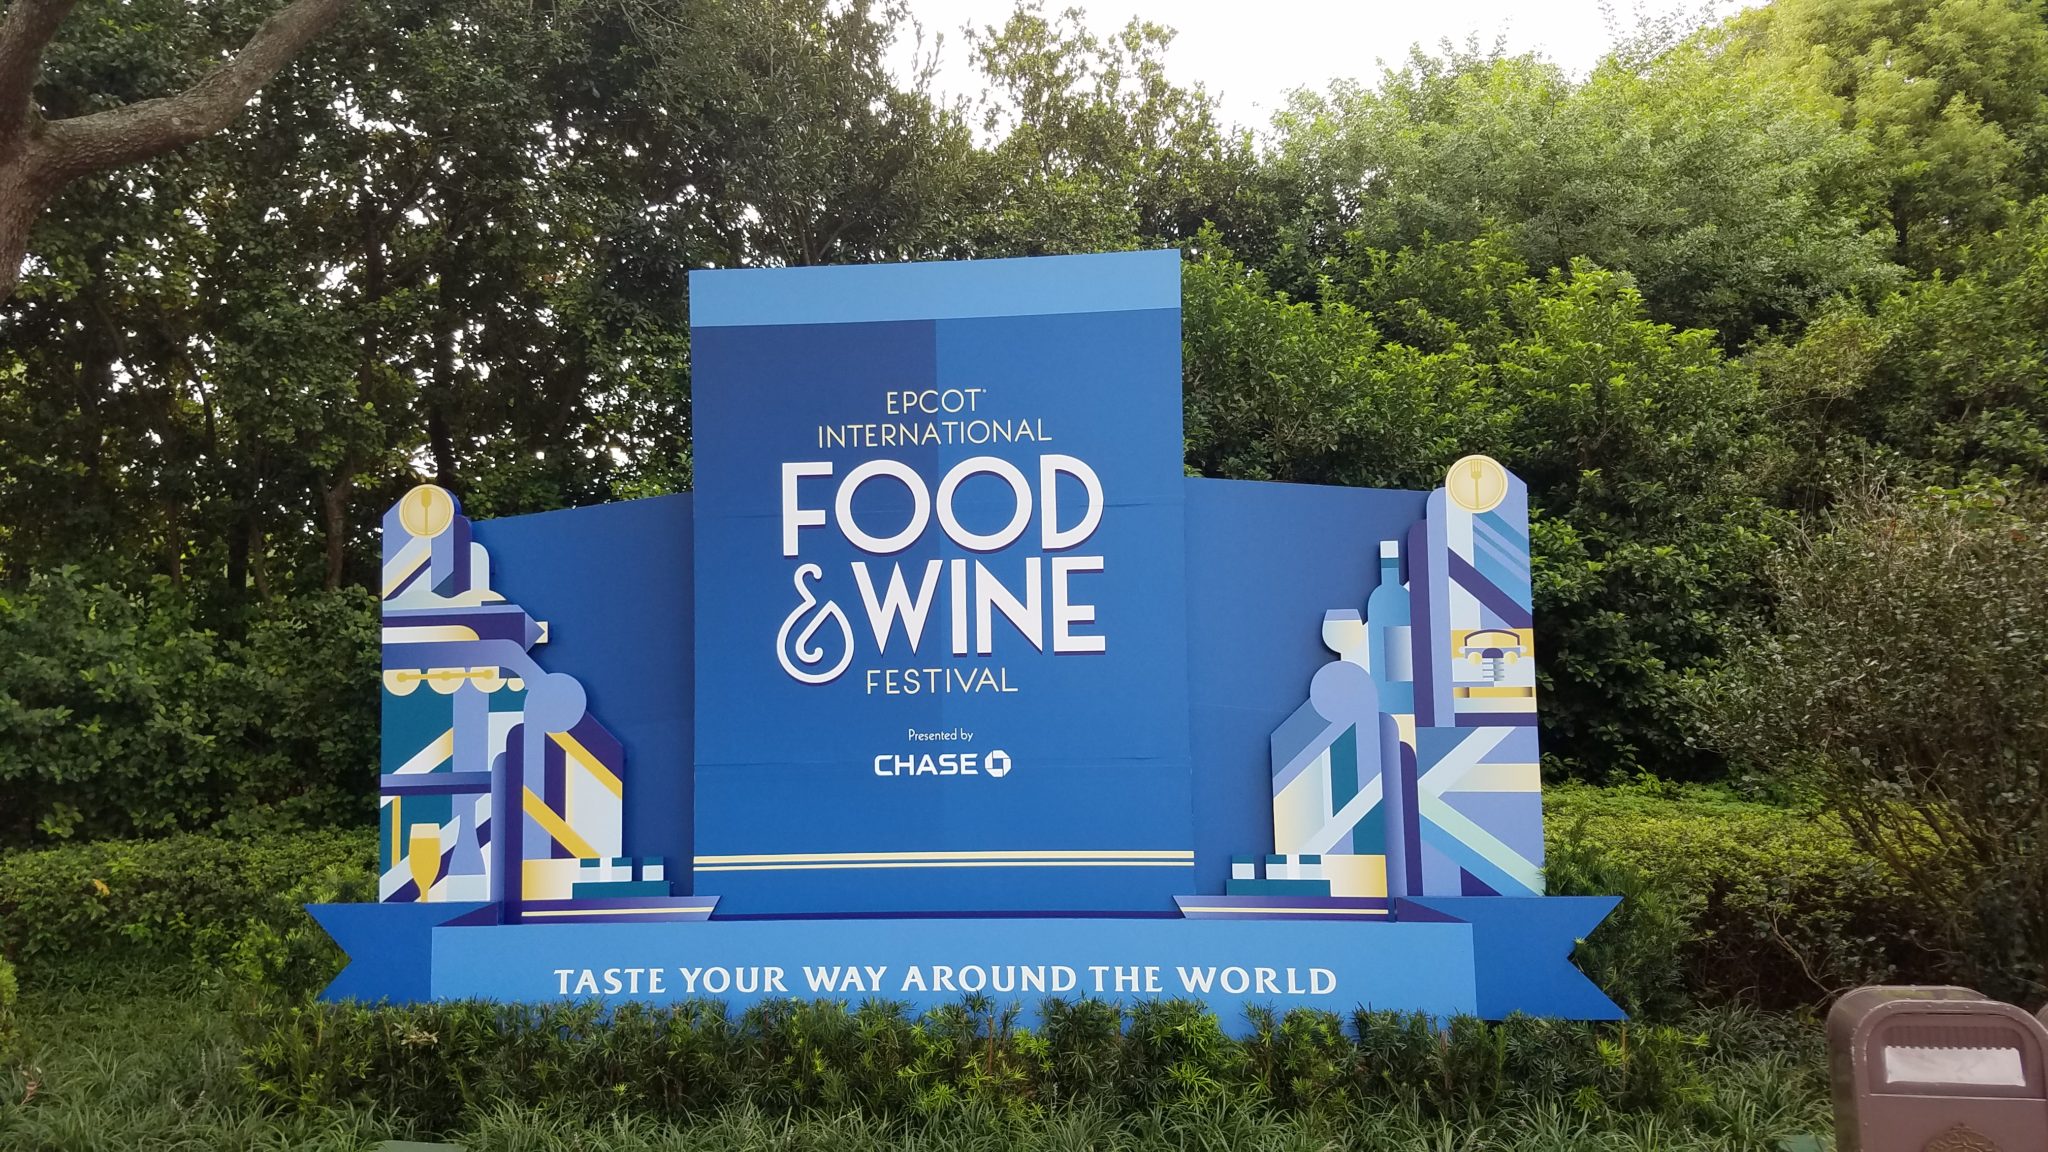 2016 Epcot International Food & Wine Festival Booths & Menus